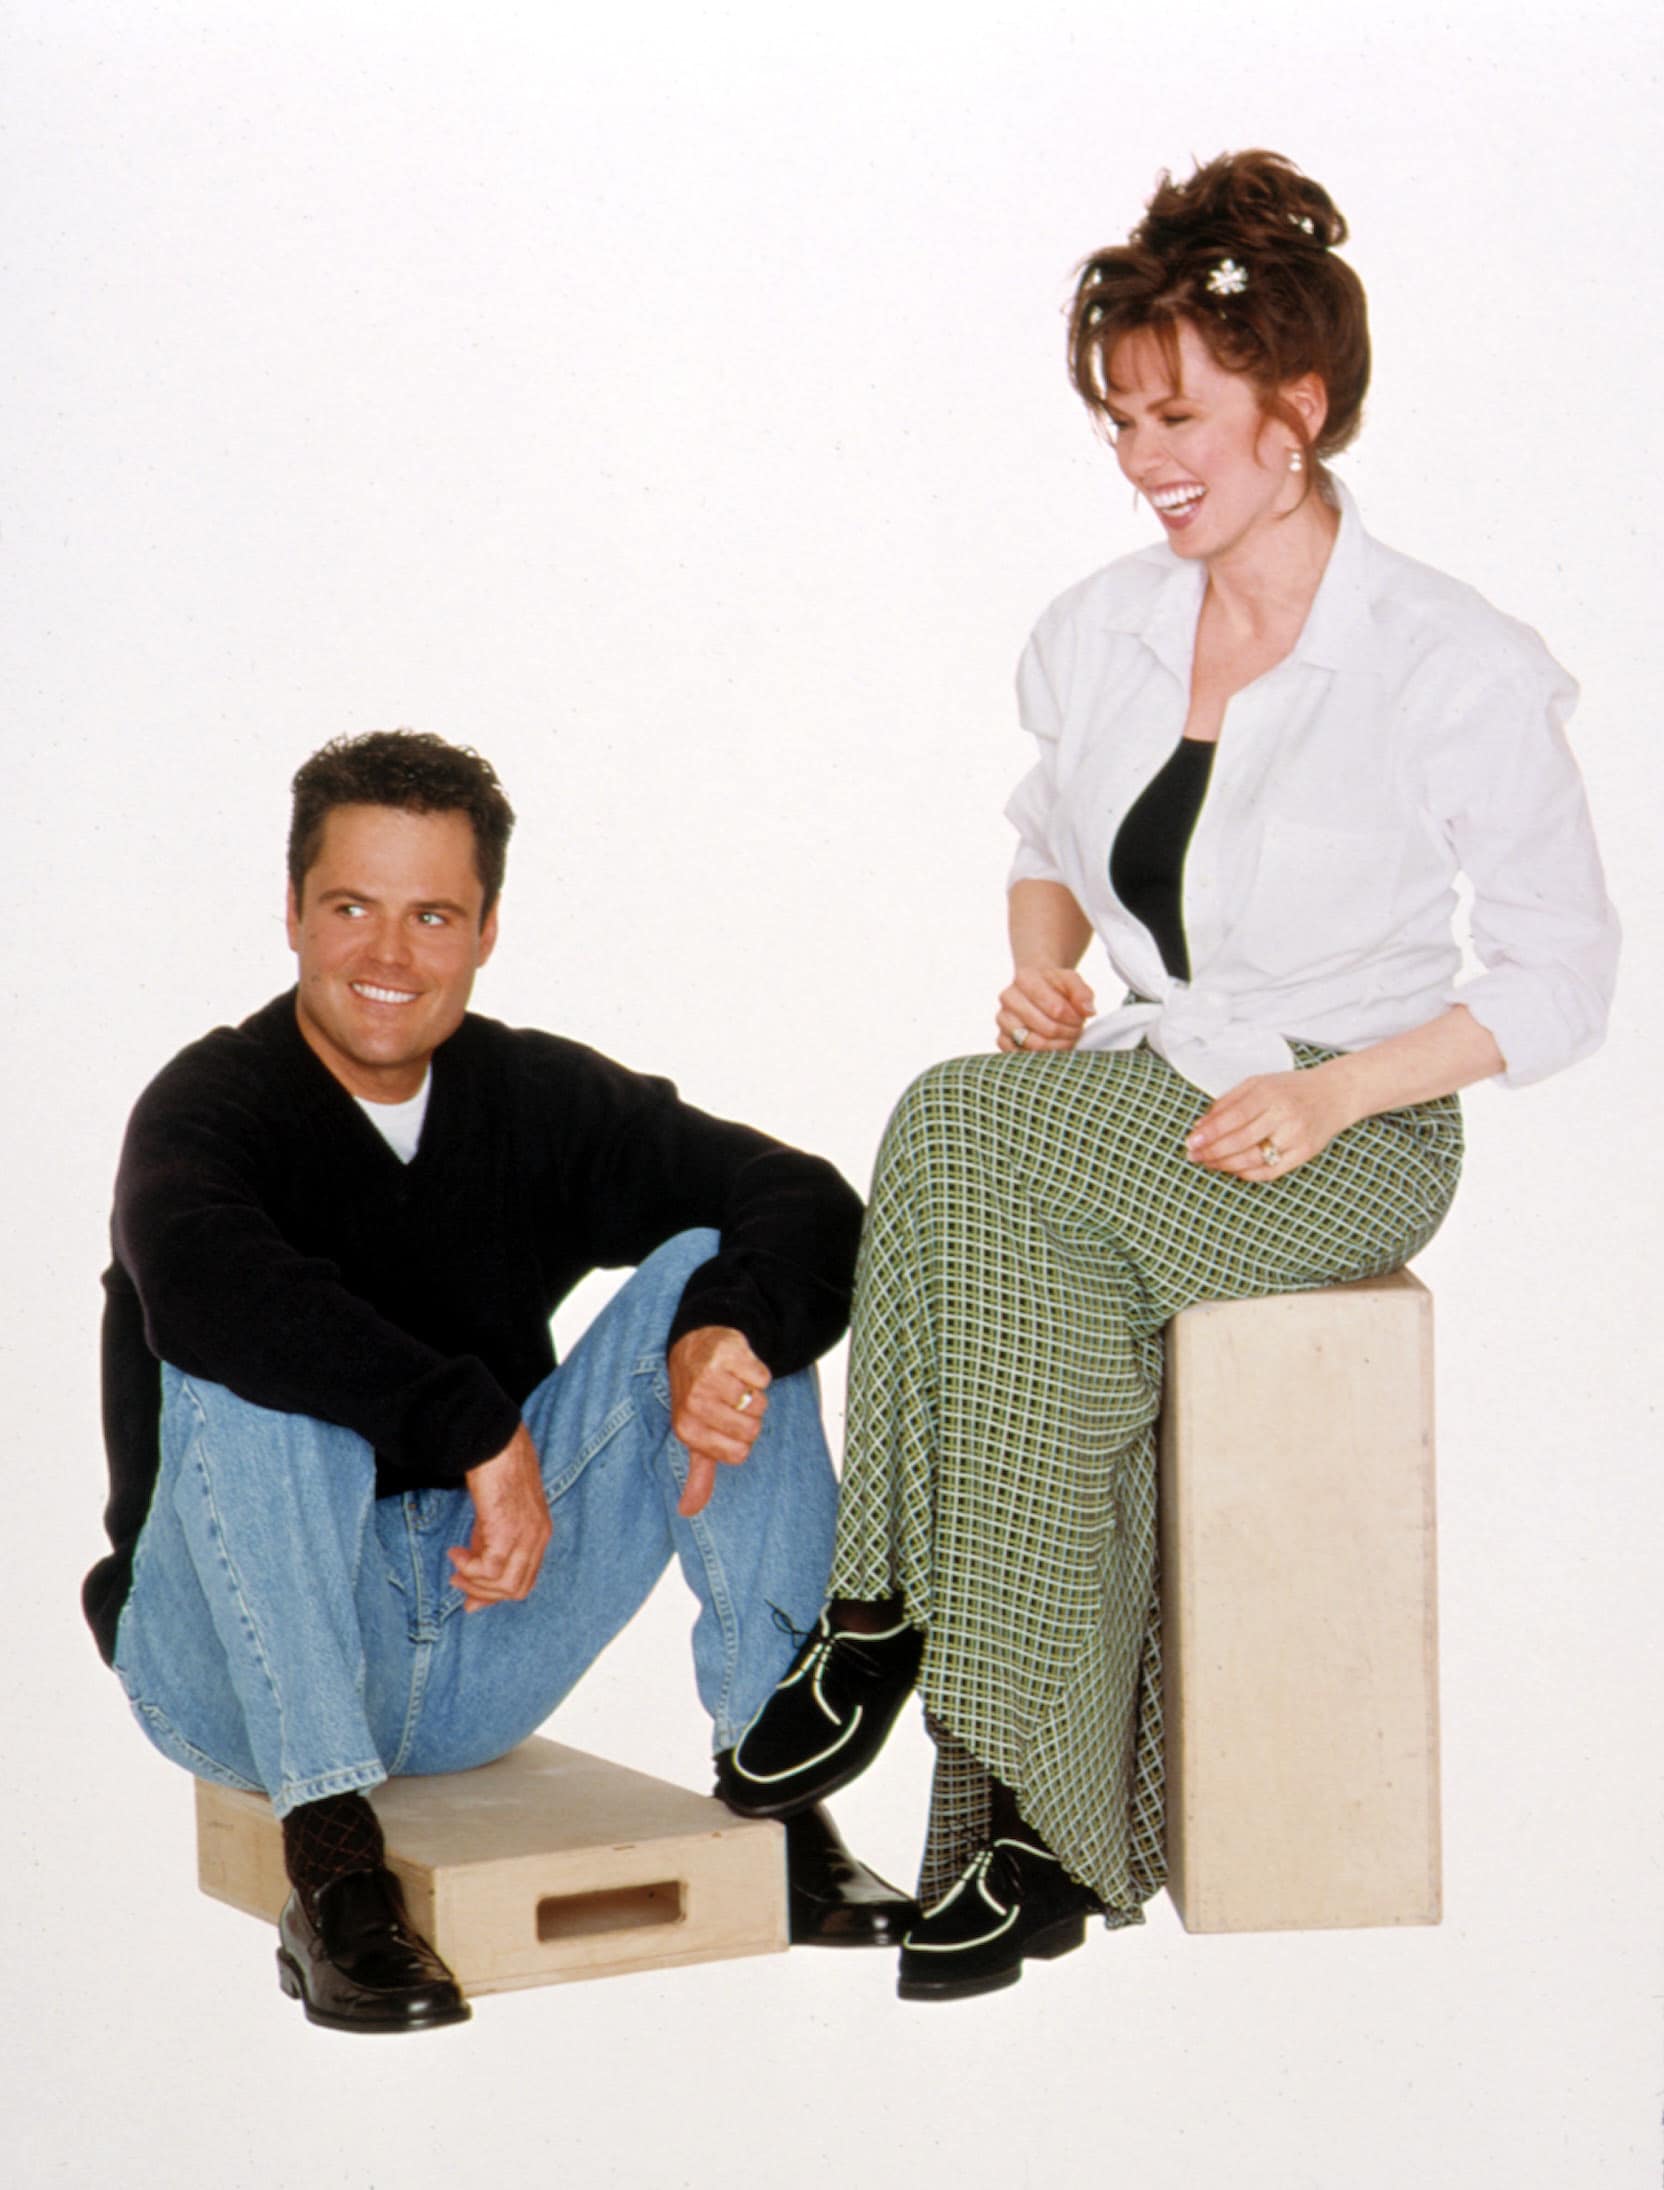 DONNY AND MARIE, Donny Osmond, Marie Osmond, 1998 - 2000